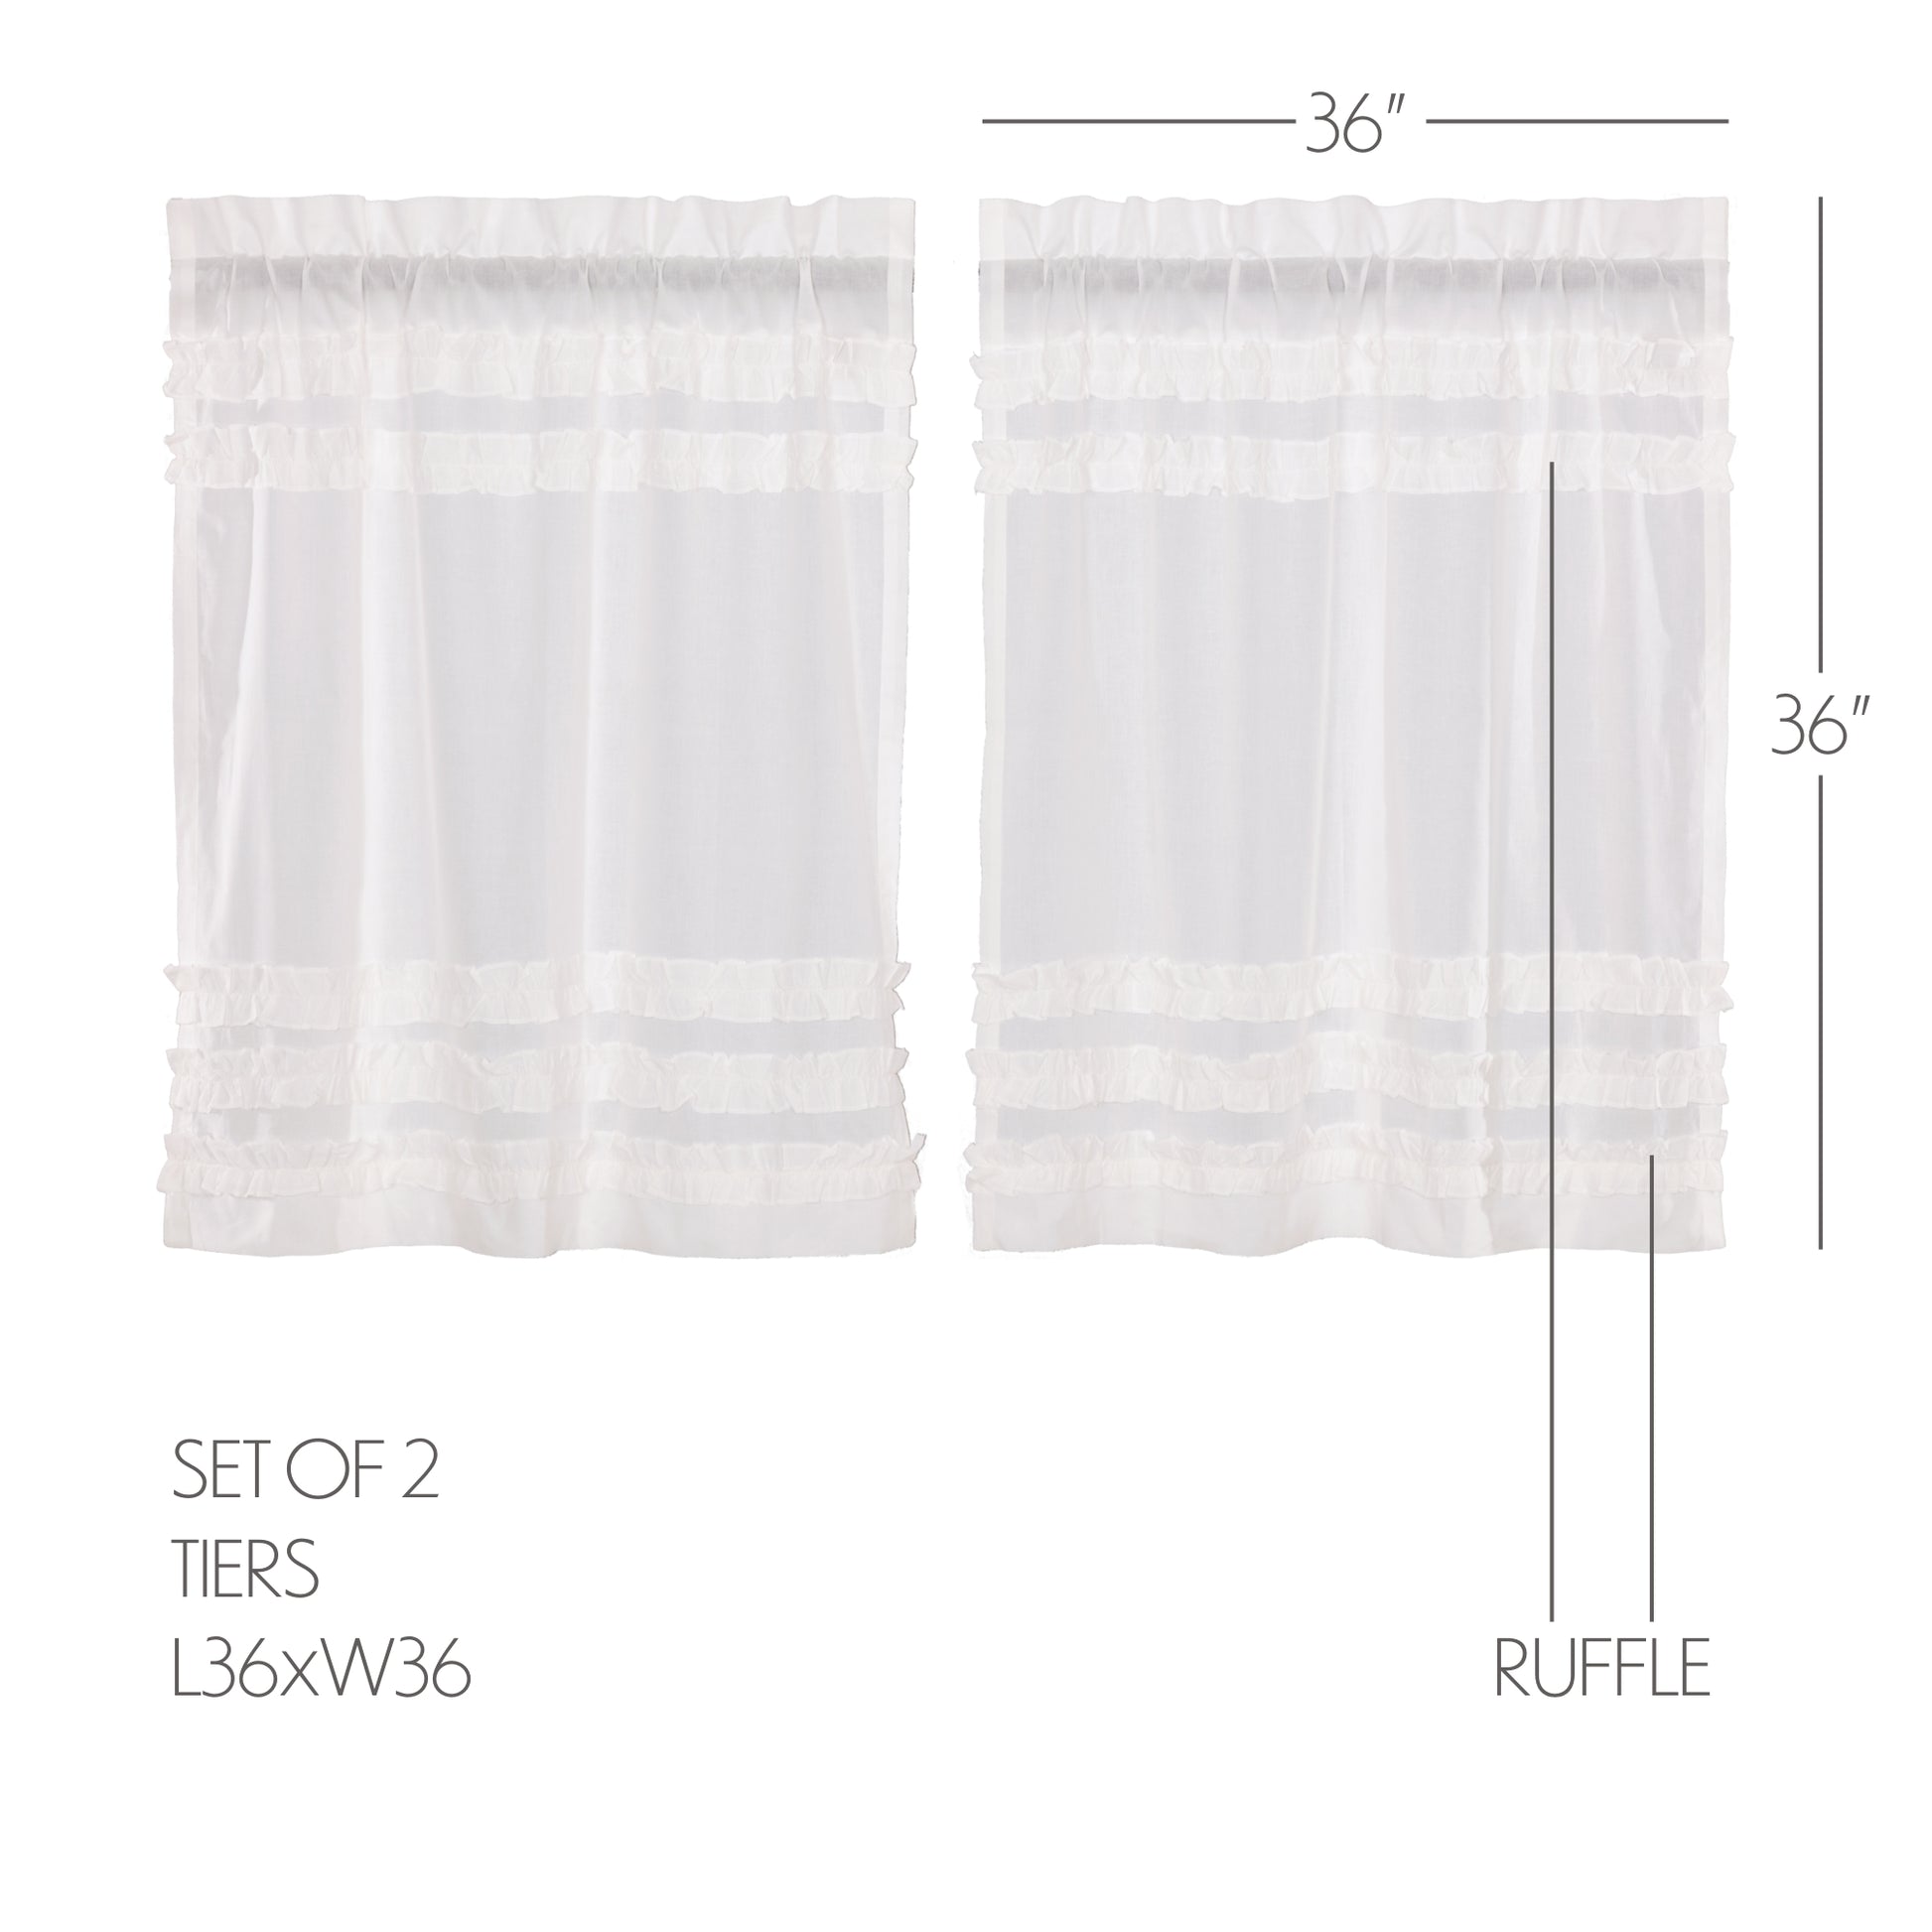 52000-White-Ruffled-Sheer-Petticoat-Tier-Set-of-2-L36xW36-image-1